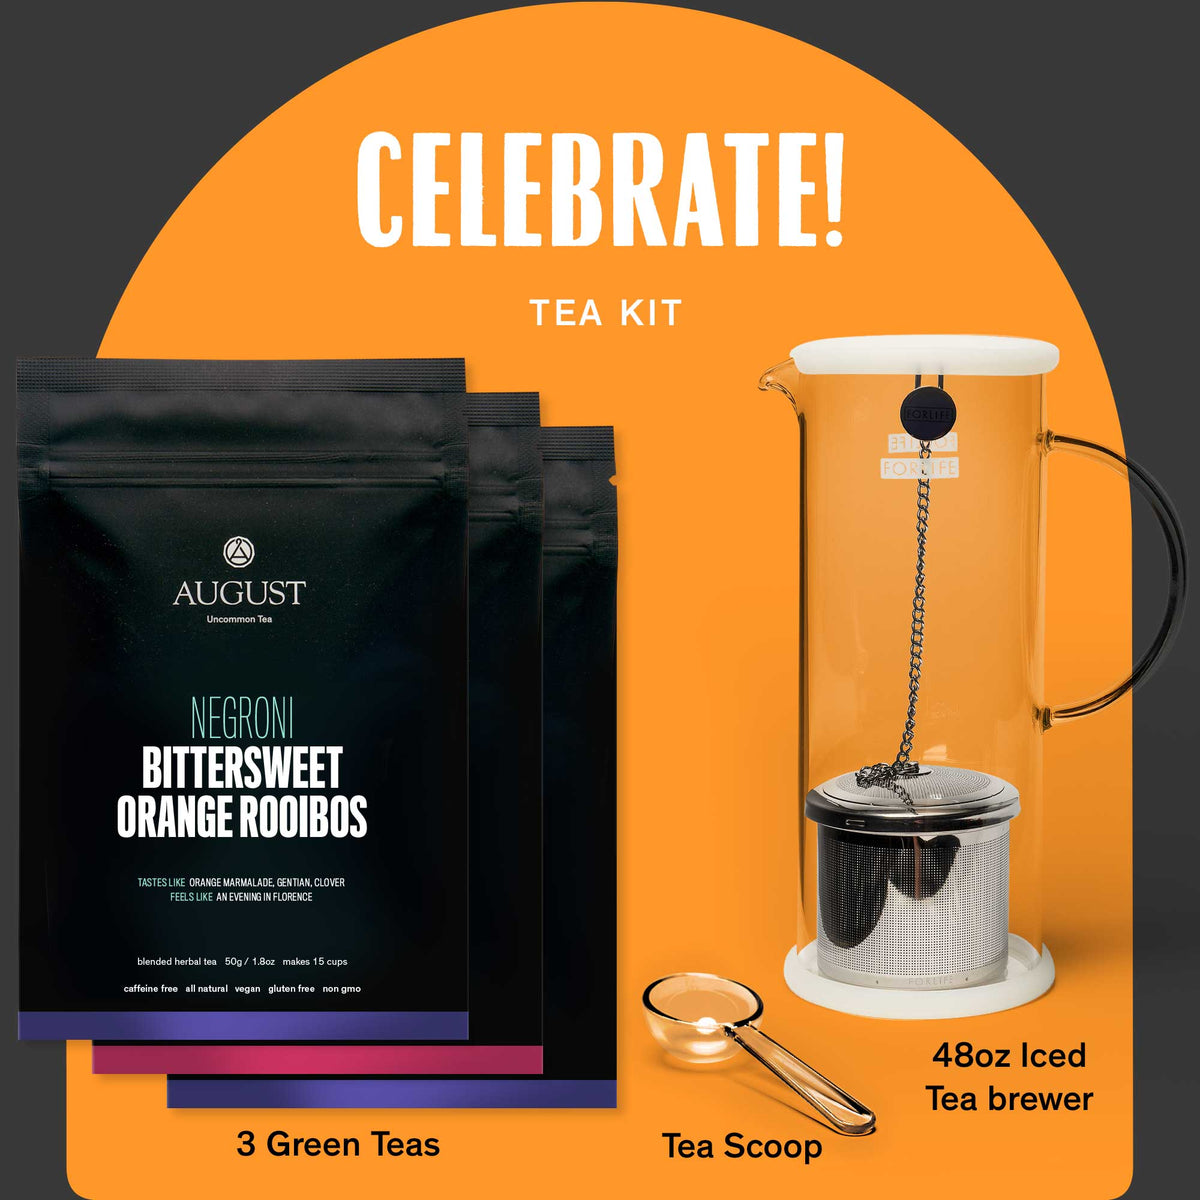 Celebrate! Tea Kit: 3 Teas With Cocktail Flavor and Zero Alcohol